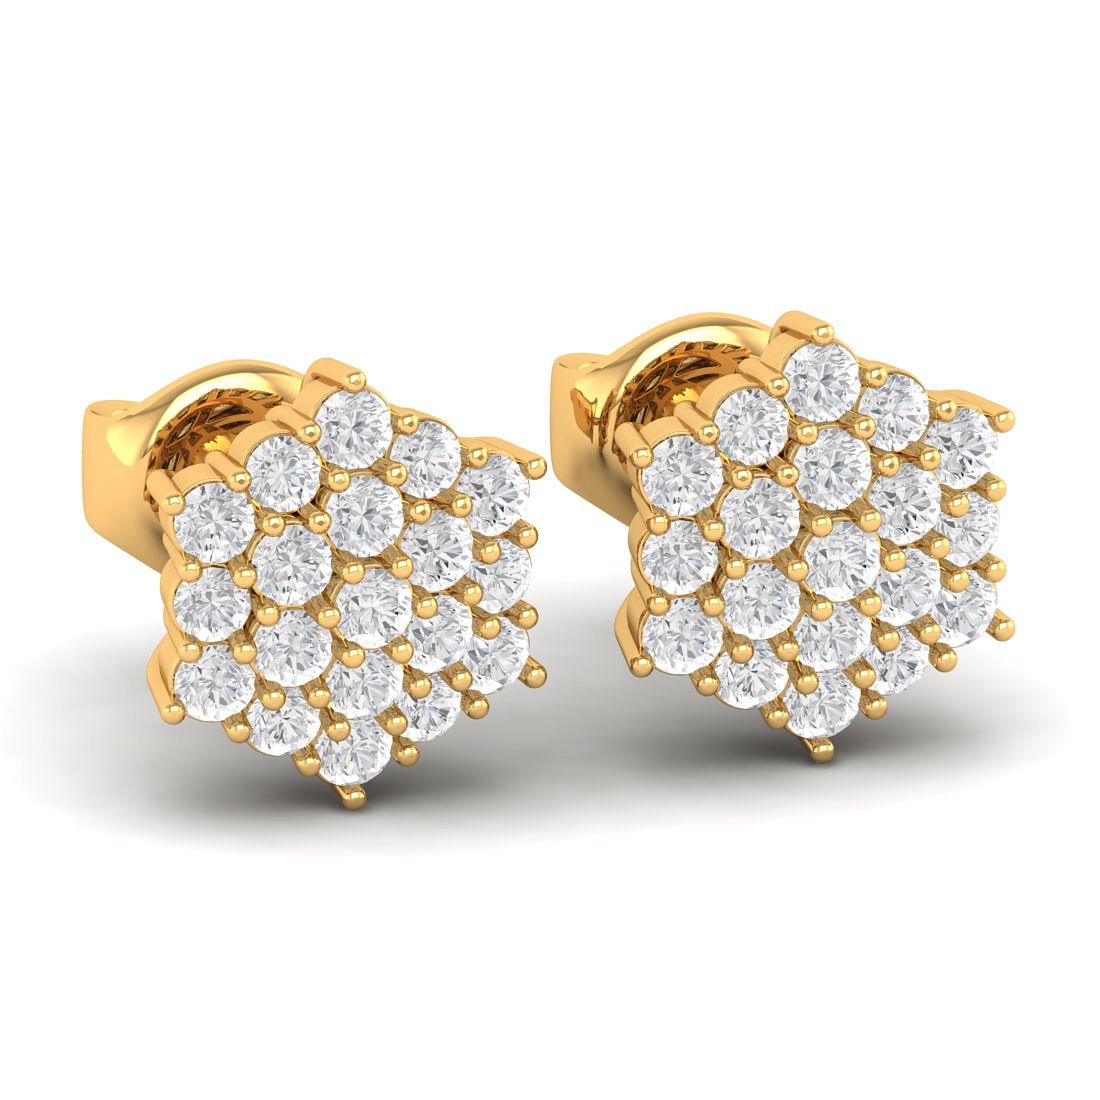 14k Yellow Gold Galaxy Diamond Earrings For Her